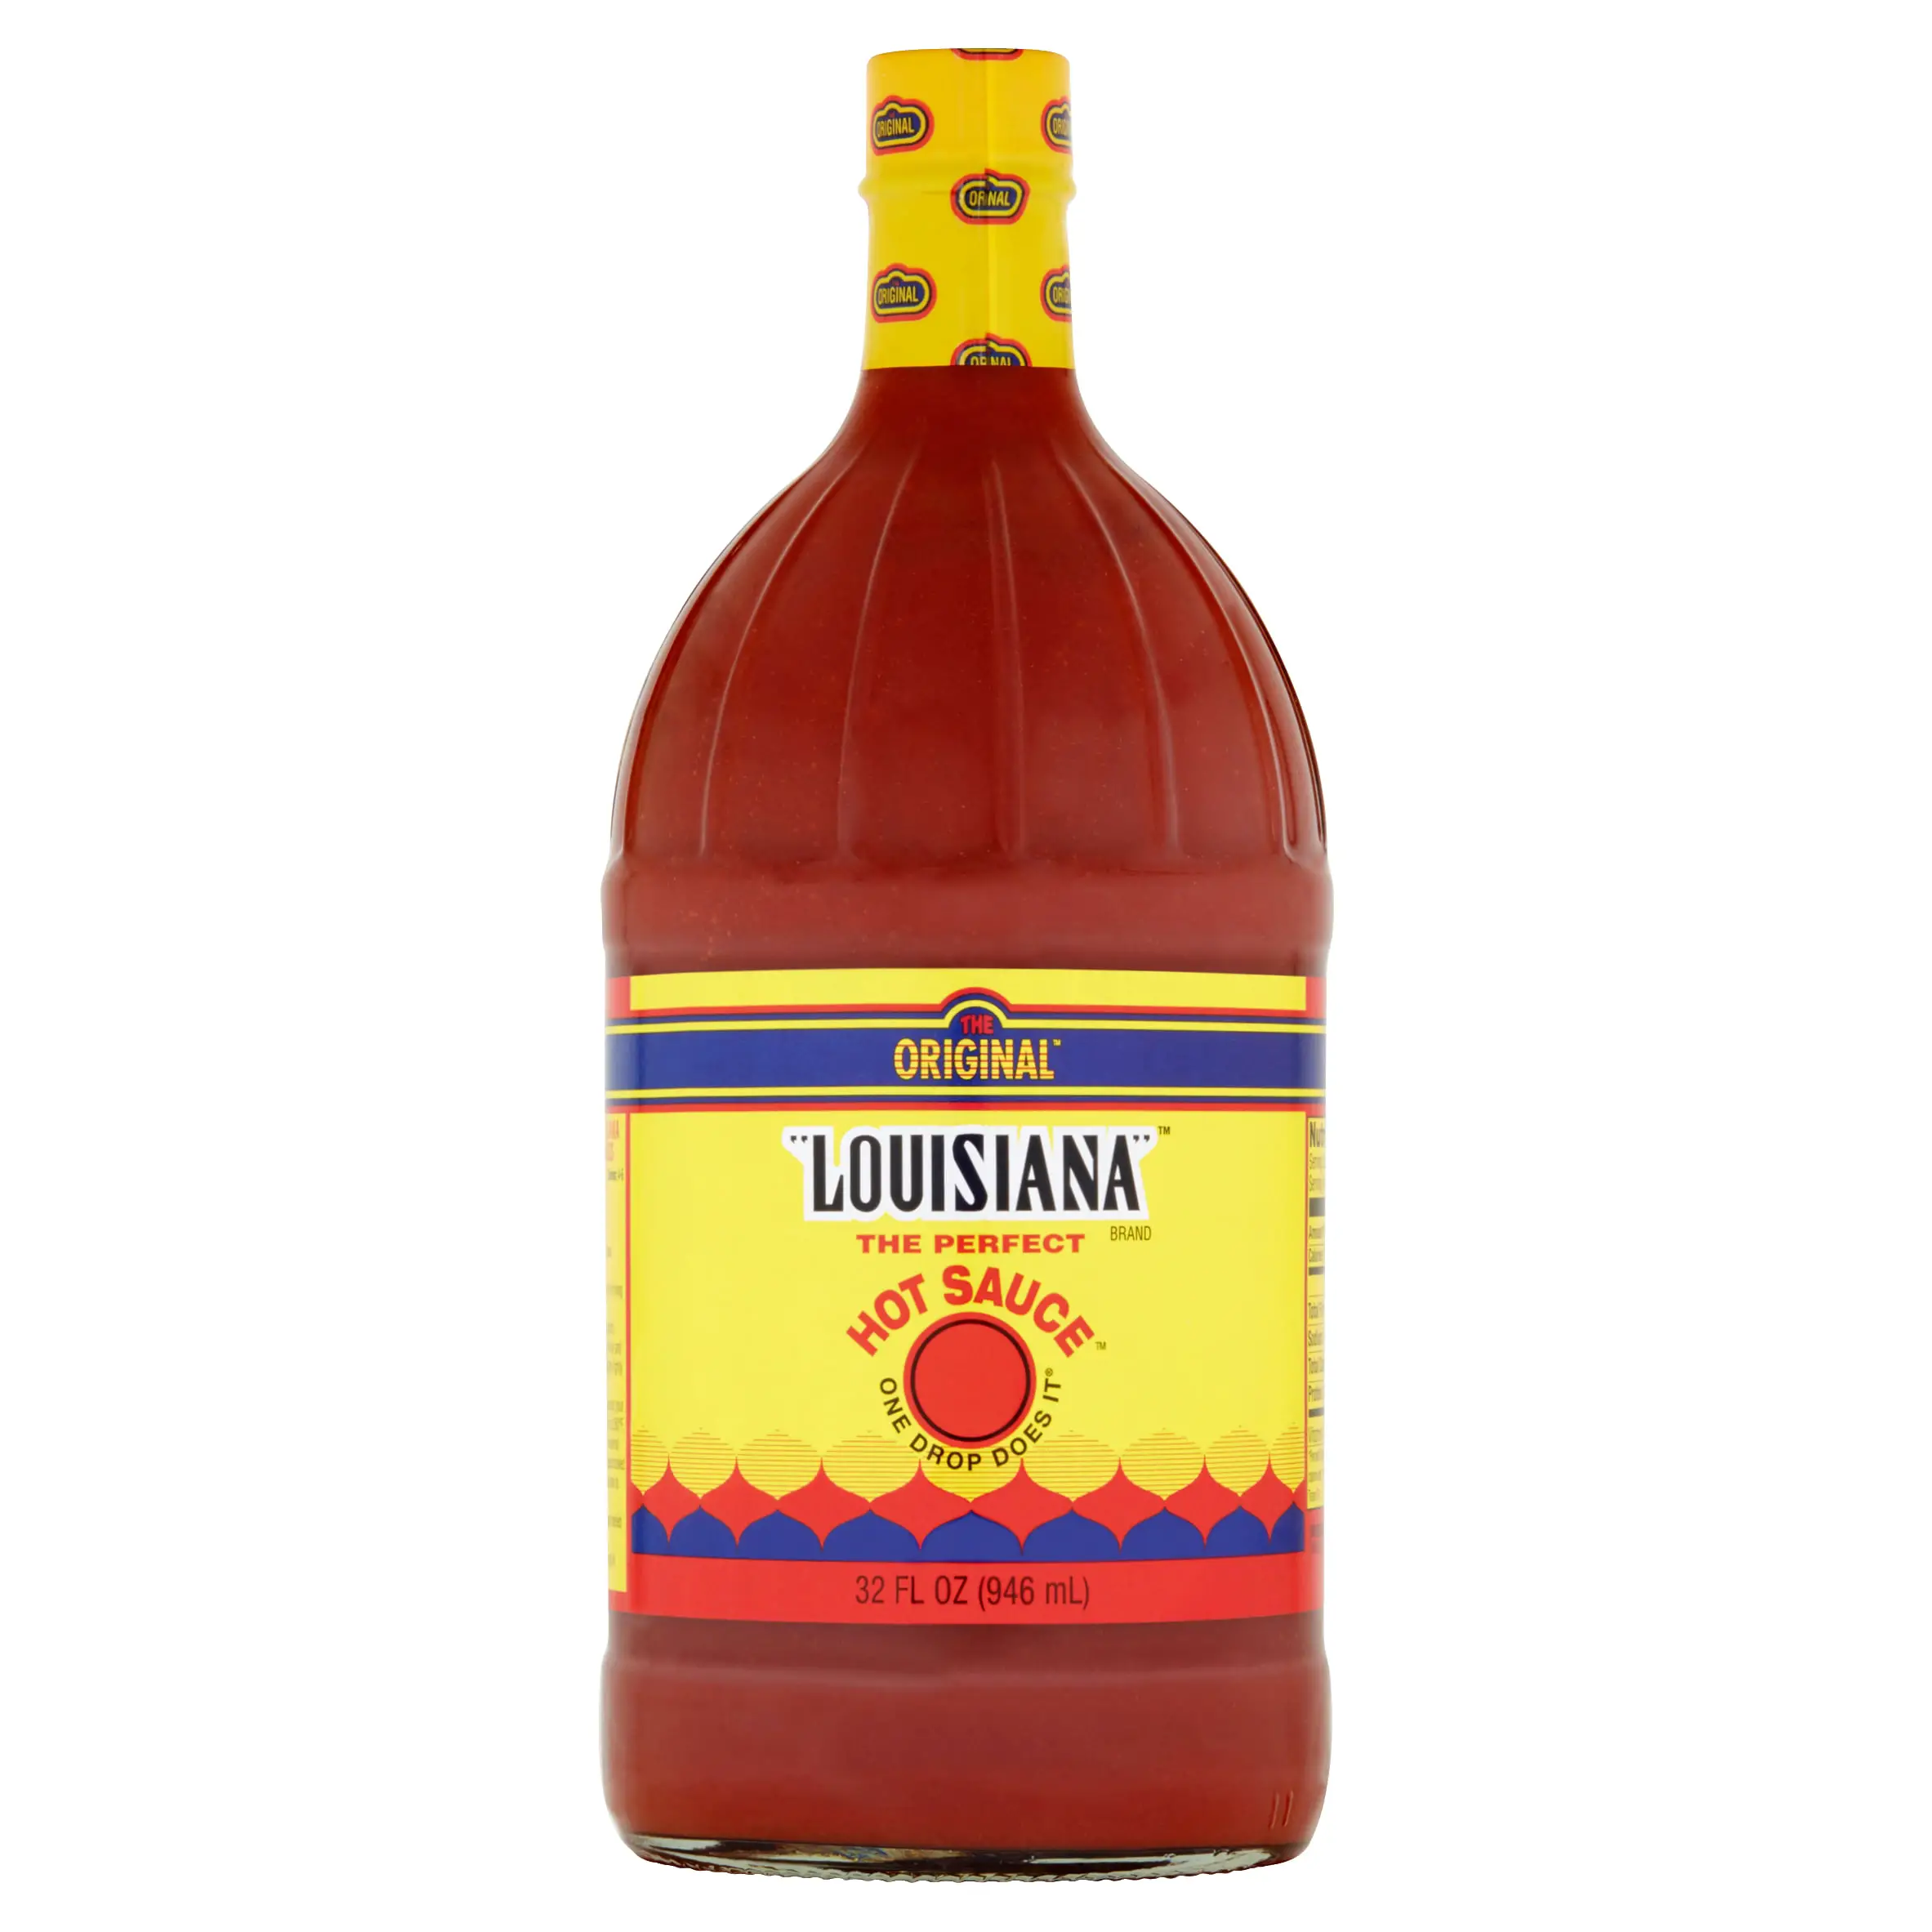 Louisiana The Perfect Hot Sauce, 32 Fl Oz